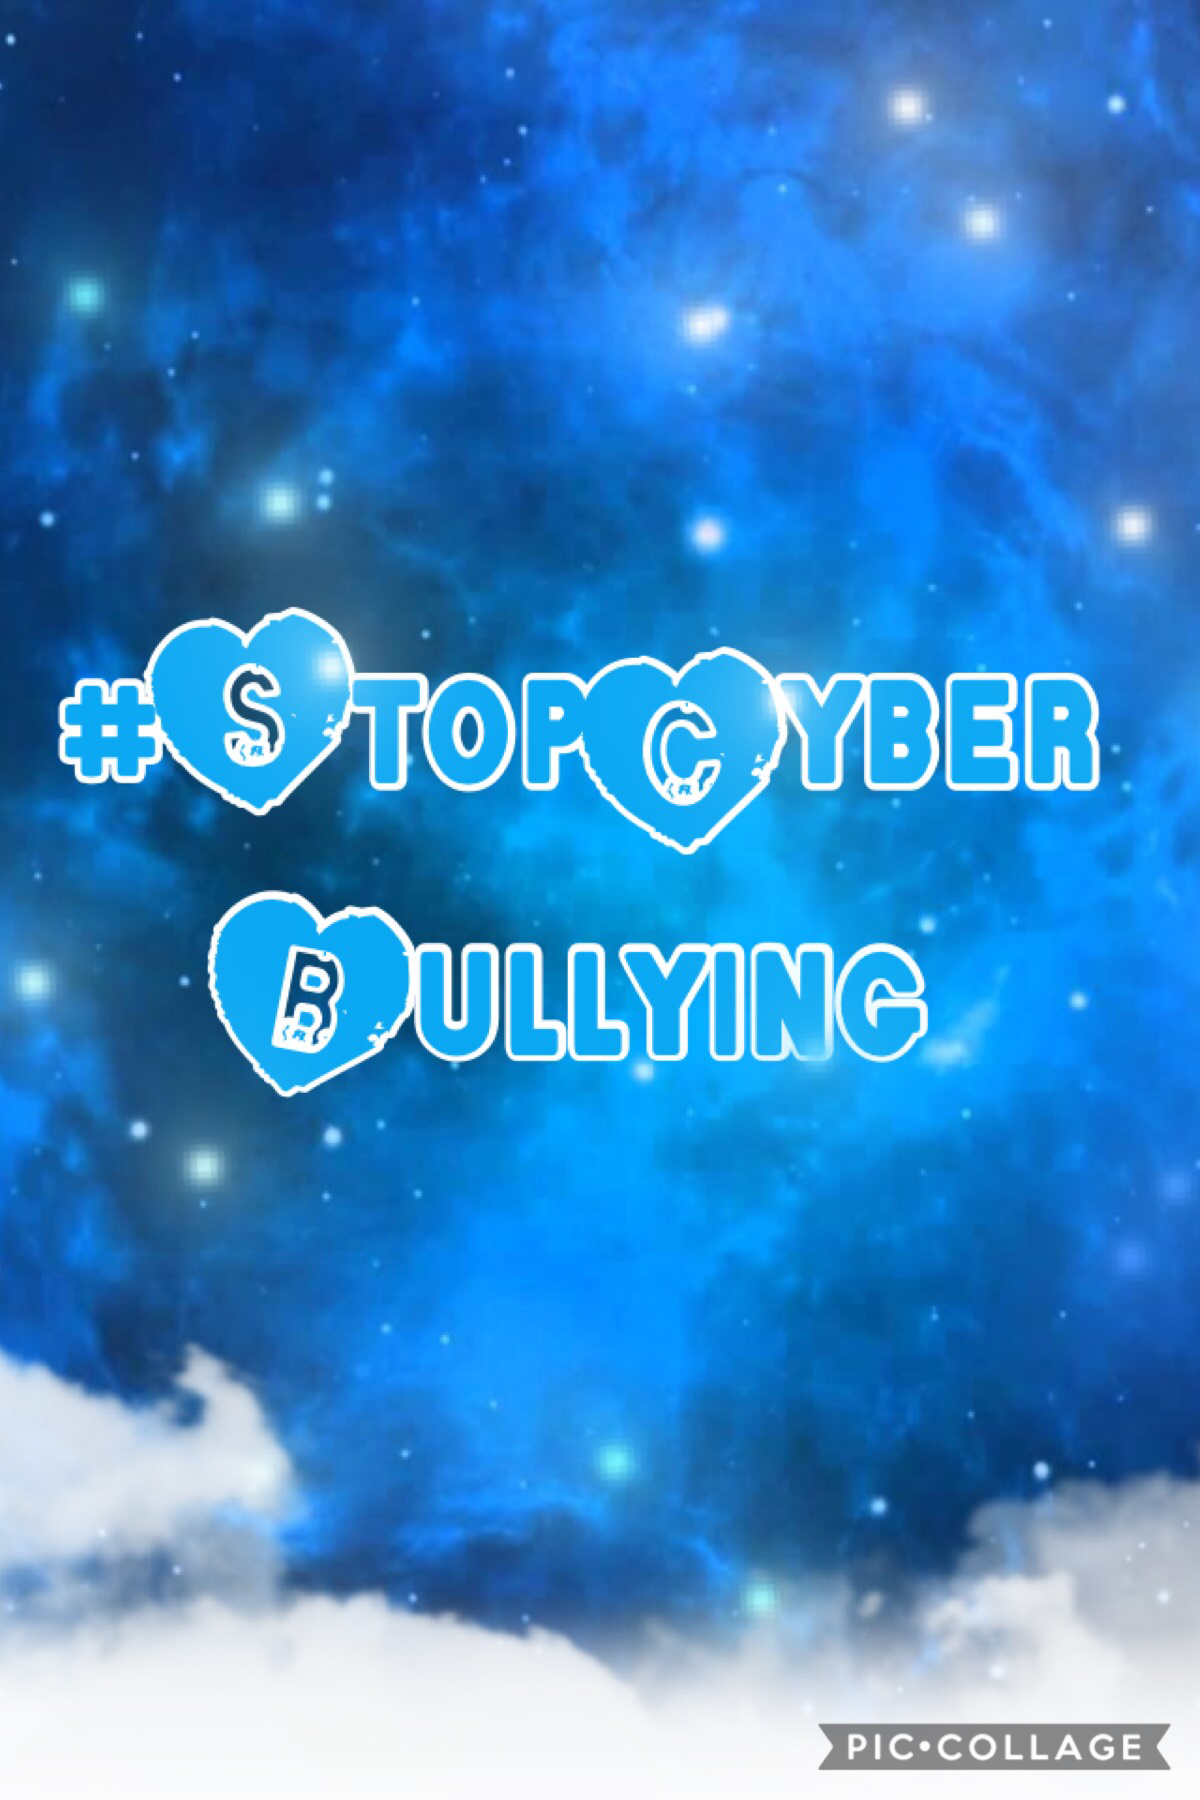 #StopCyberBullying